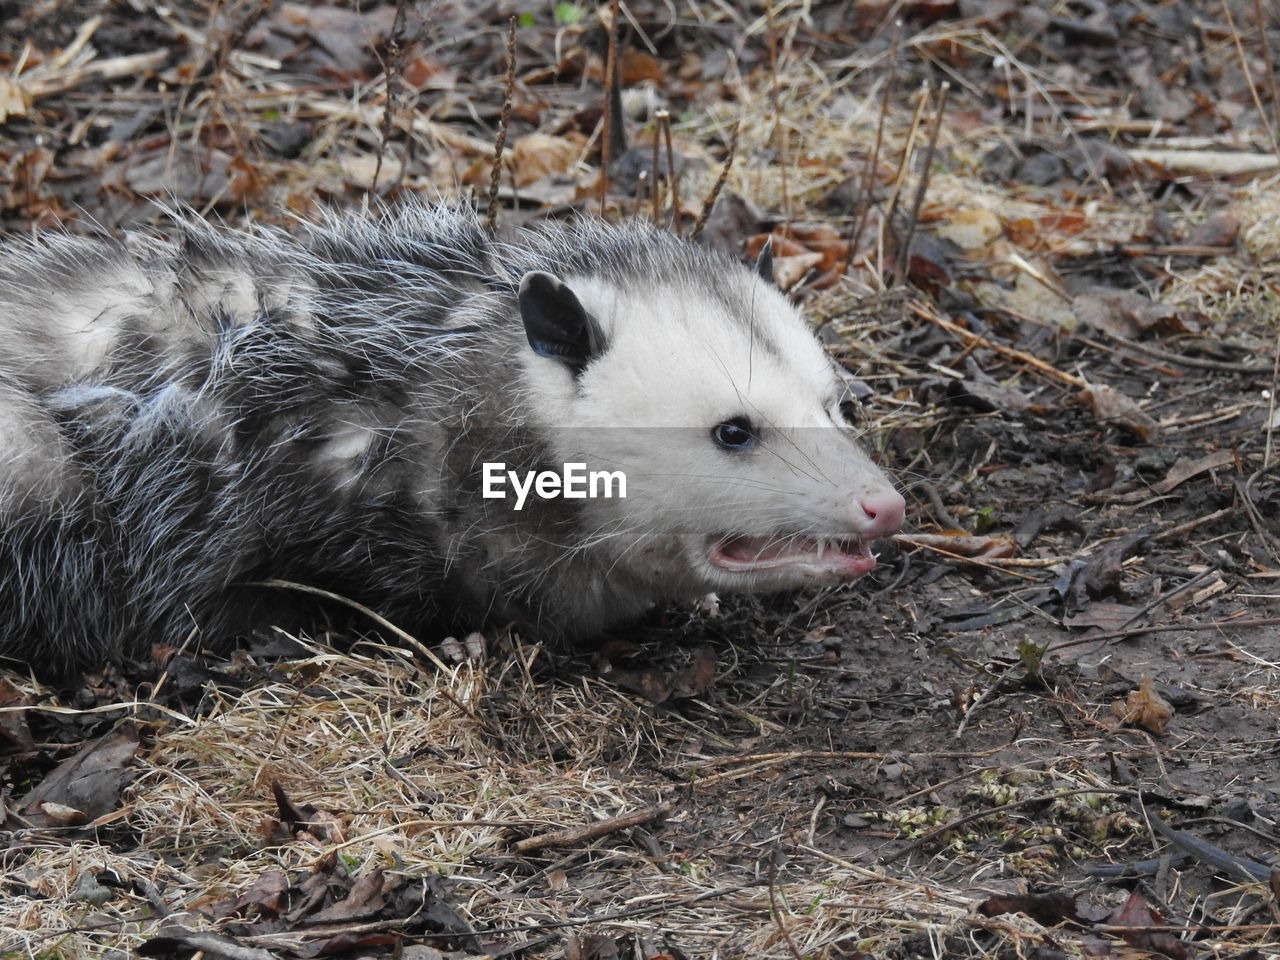 Close-up of an opossum on ground